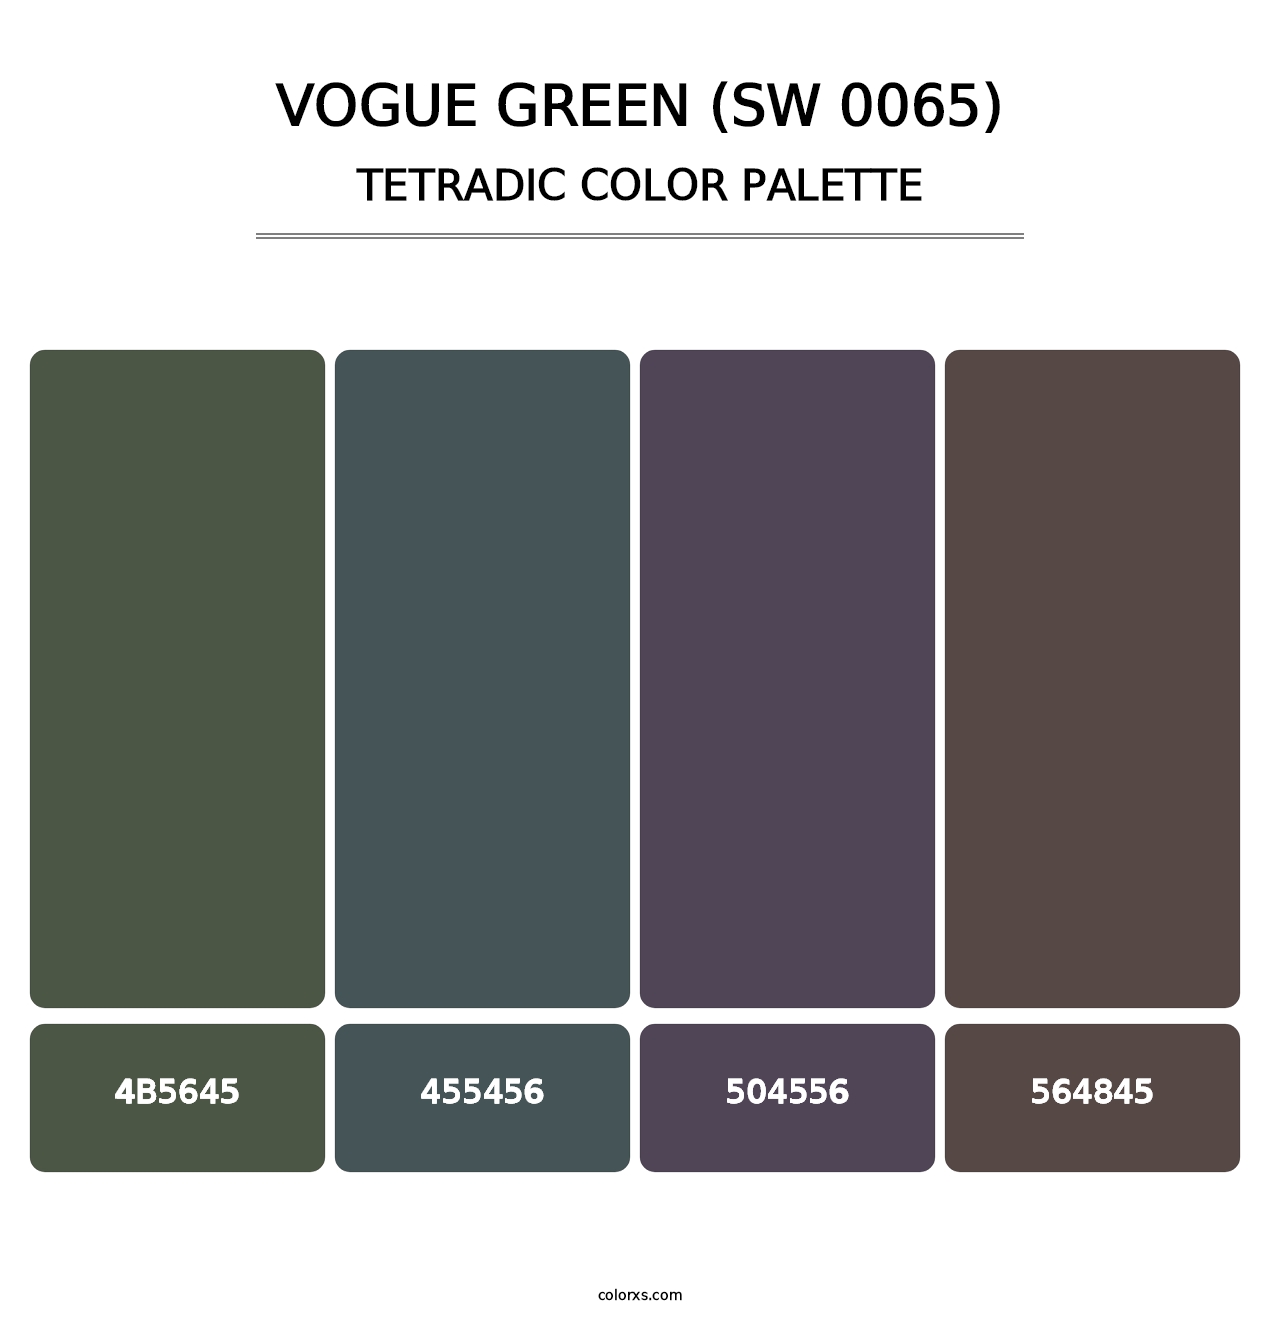 Vogue Green (SW 0065) - Tetradic Color Palette